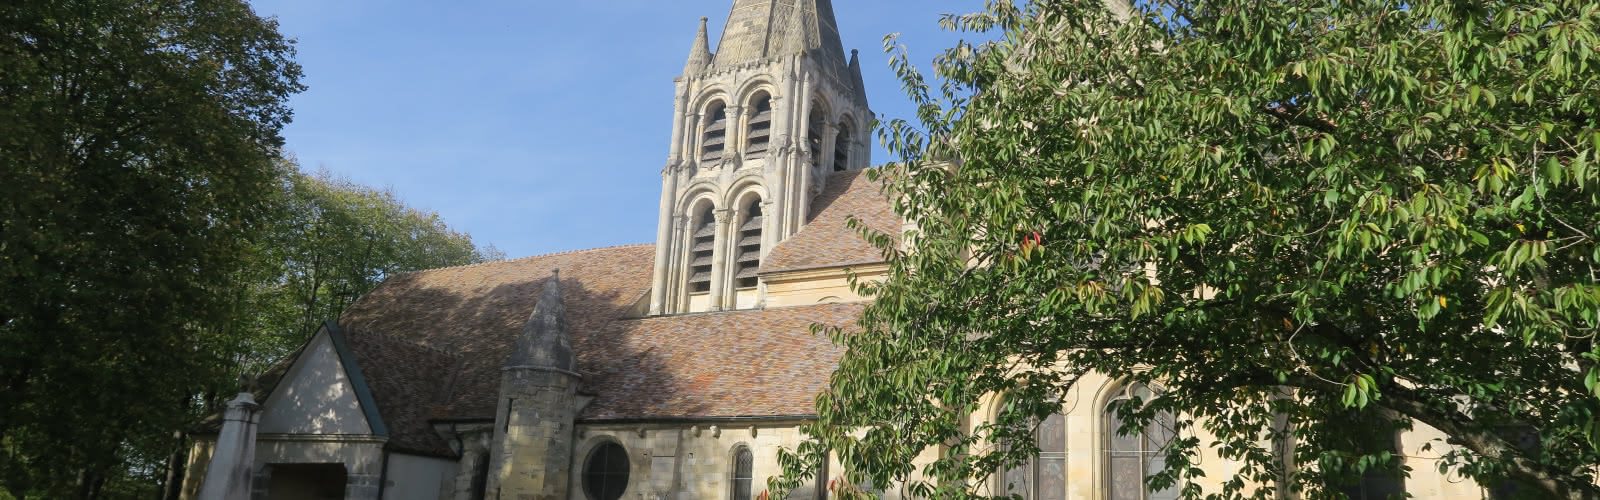 Eglise Saint-Aubin, Ennery